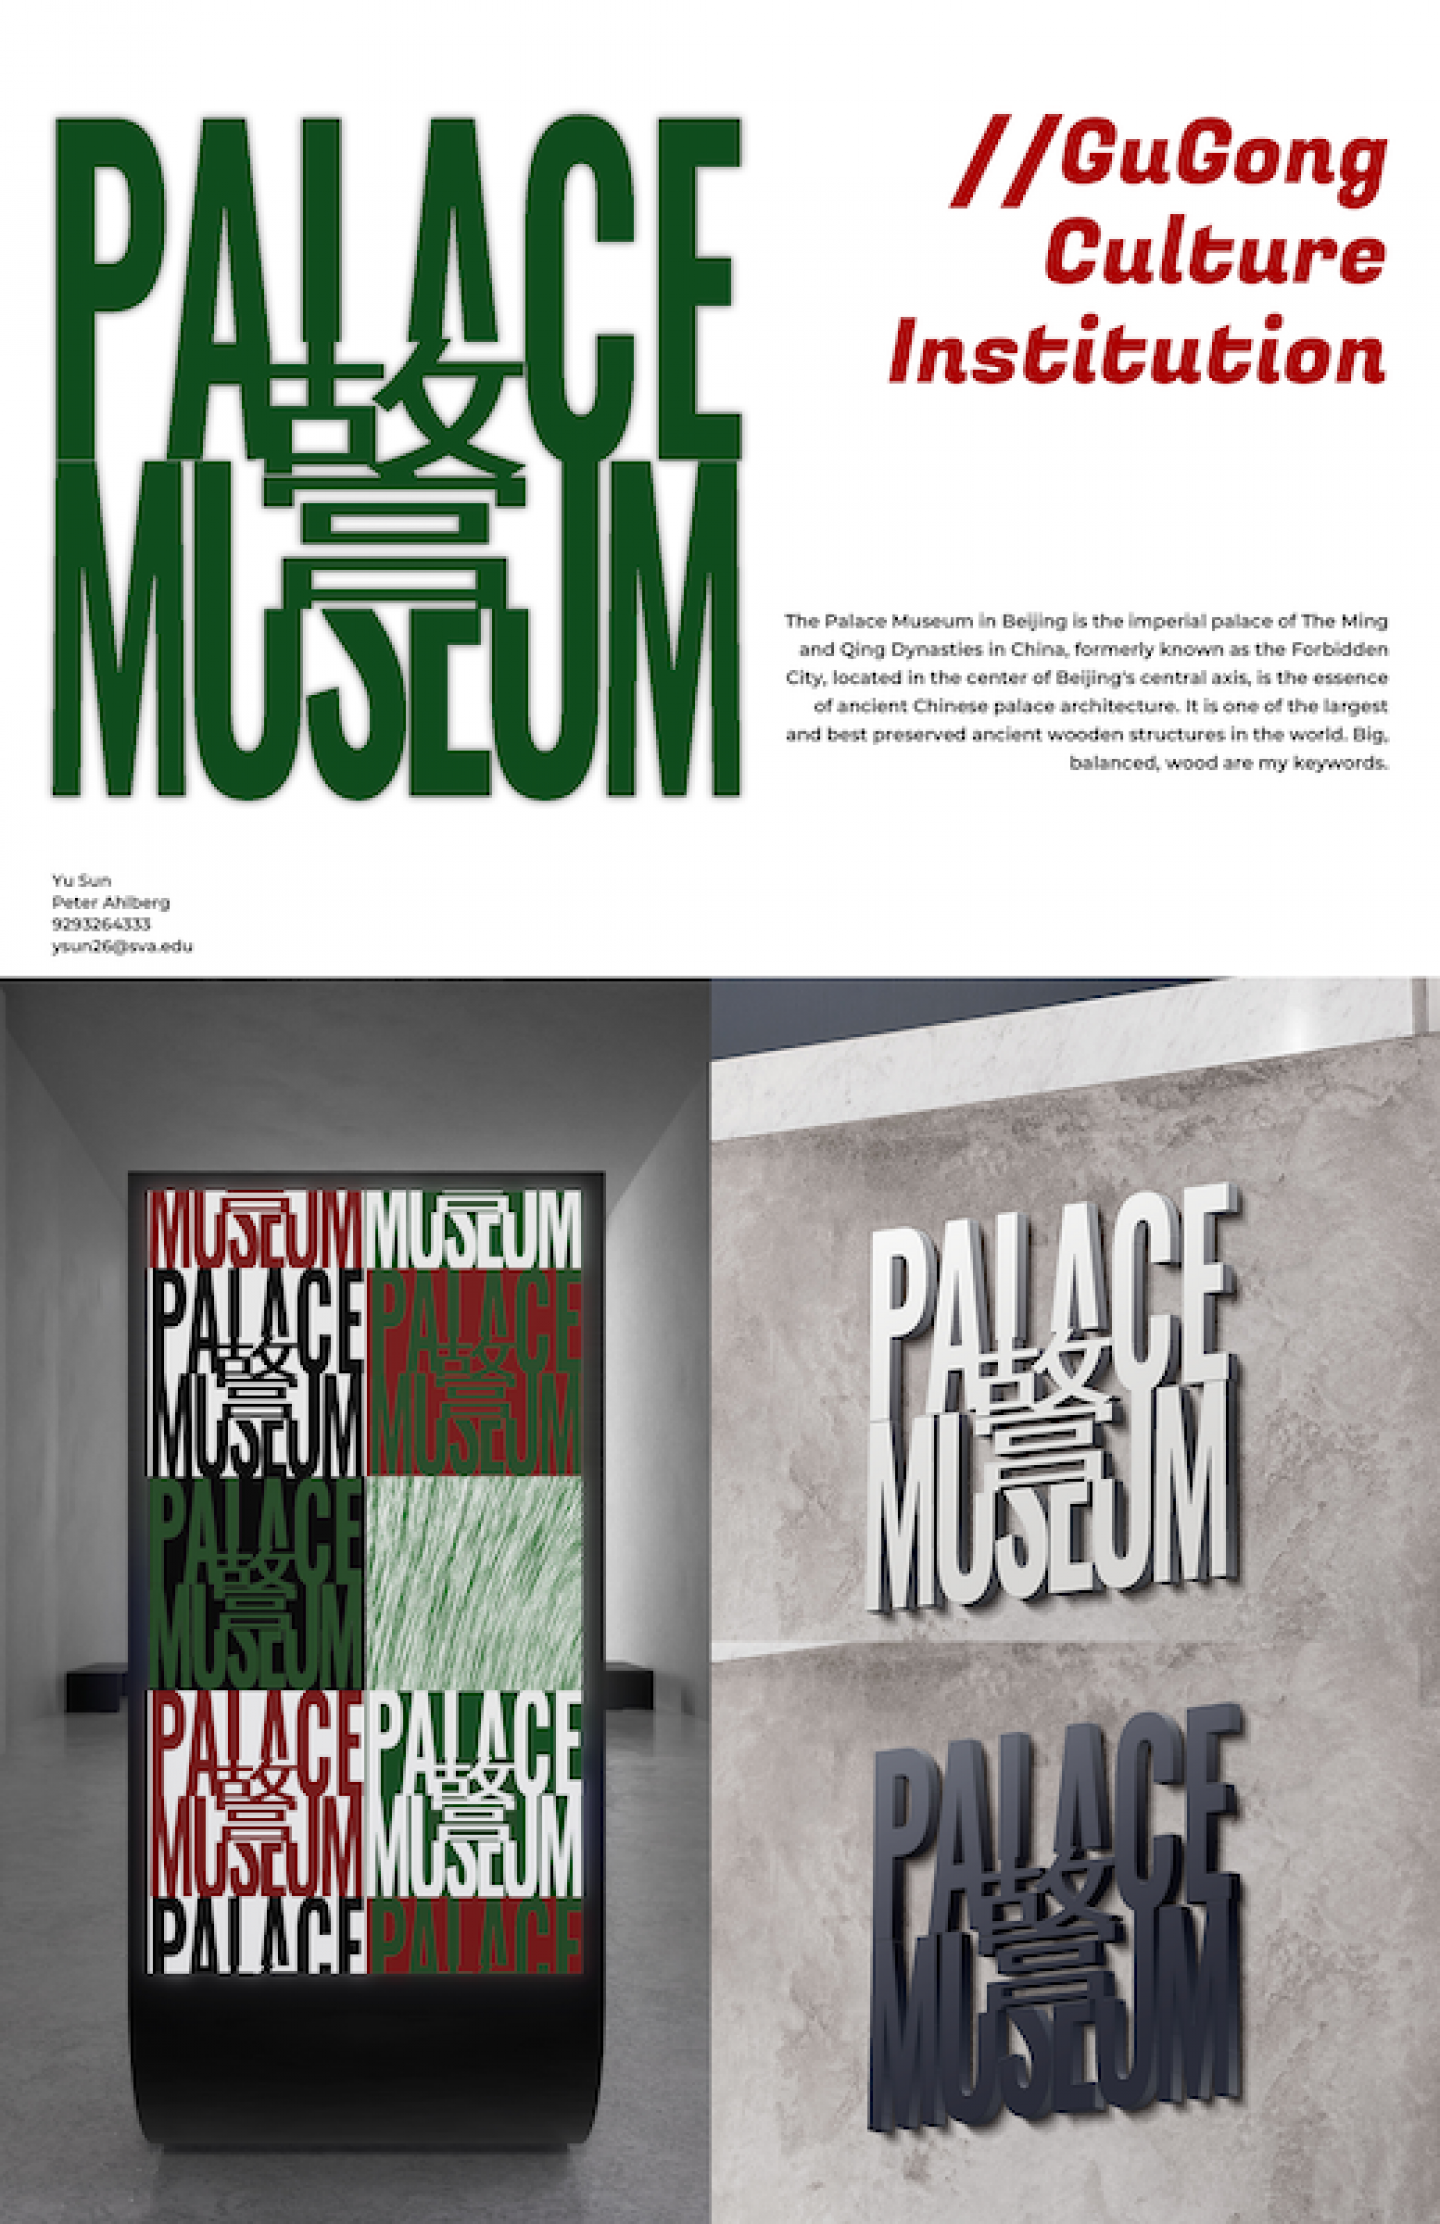 Palace Museum Culture Institution